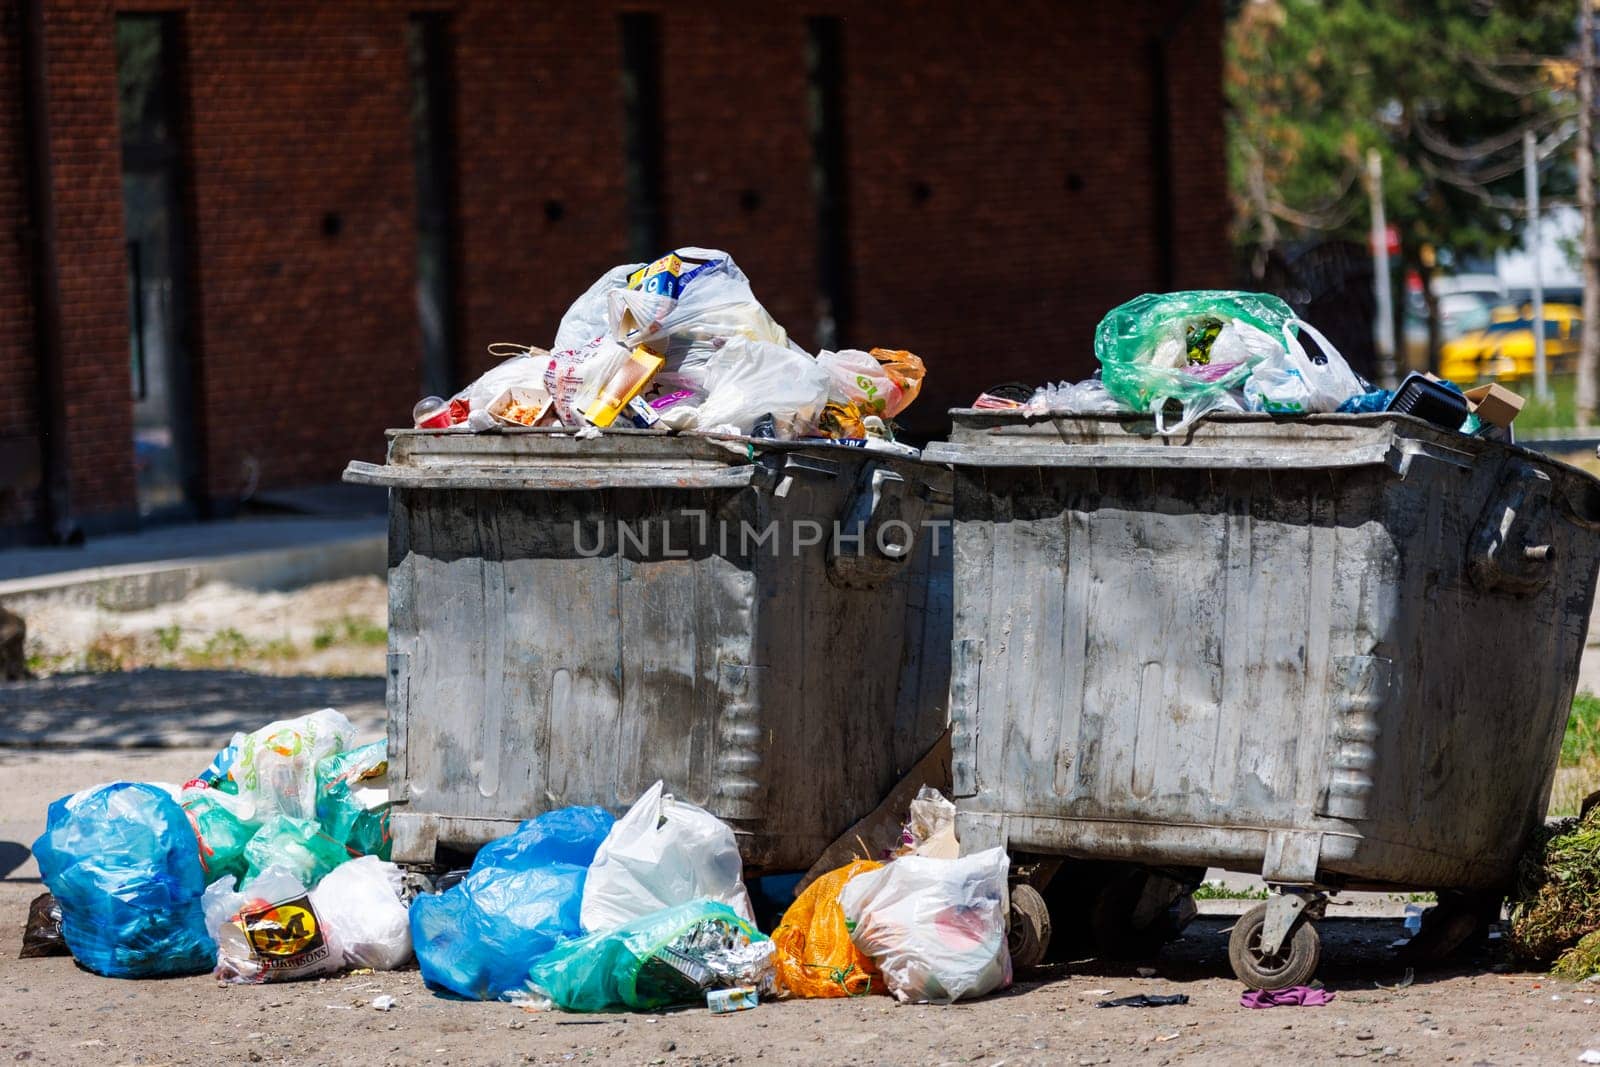 overfilled public trash bins at summer day in Bishkek, Kyrgyzstan by z1b